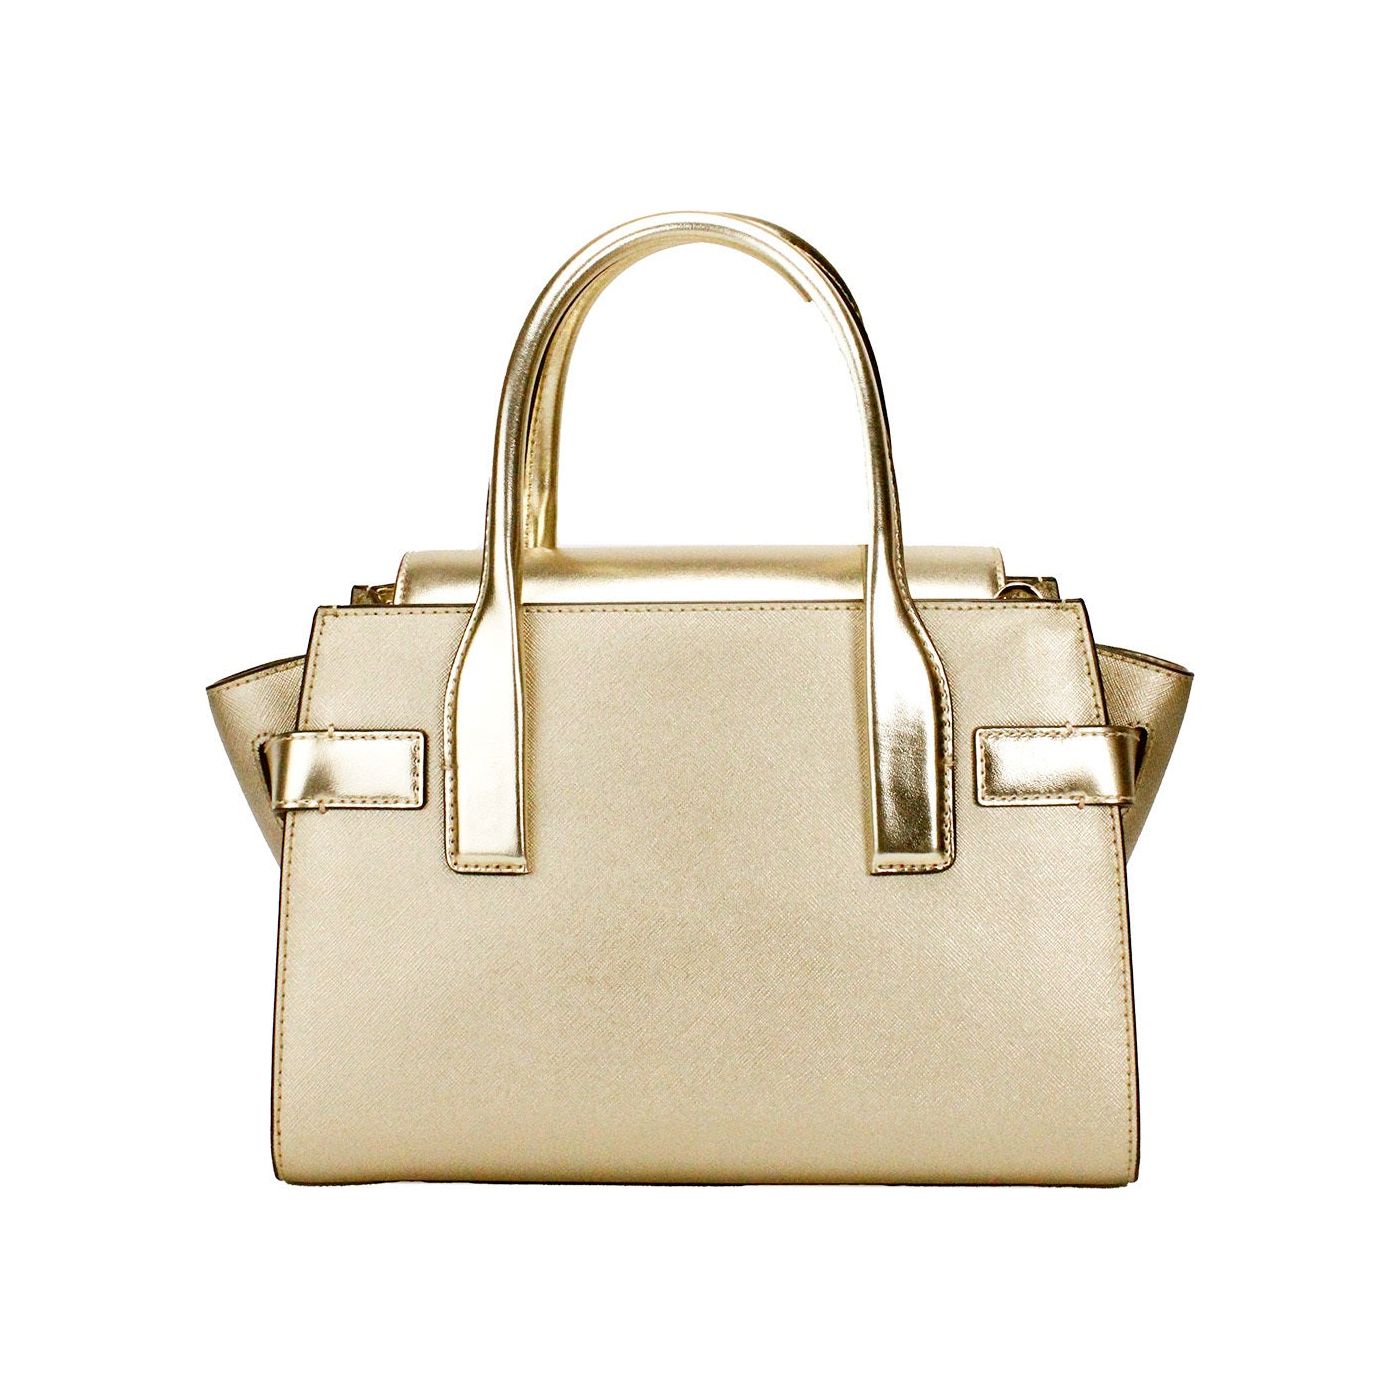 Michael Kors Carmen Medium Pale Gold Saffiano Leather Satchel Purse Bag carmen-medium-pale-gold-saffiano-leather-satchel-purse-bag